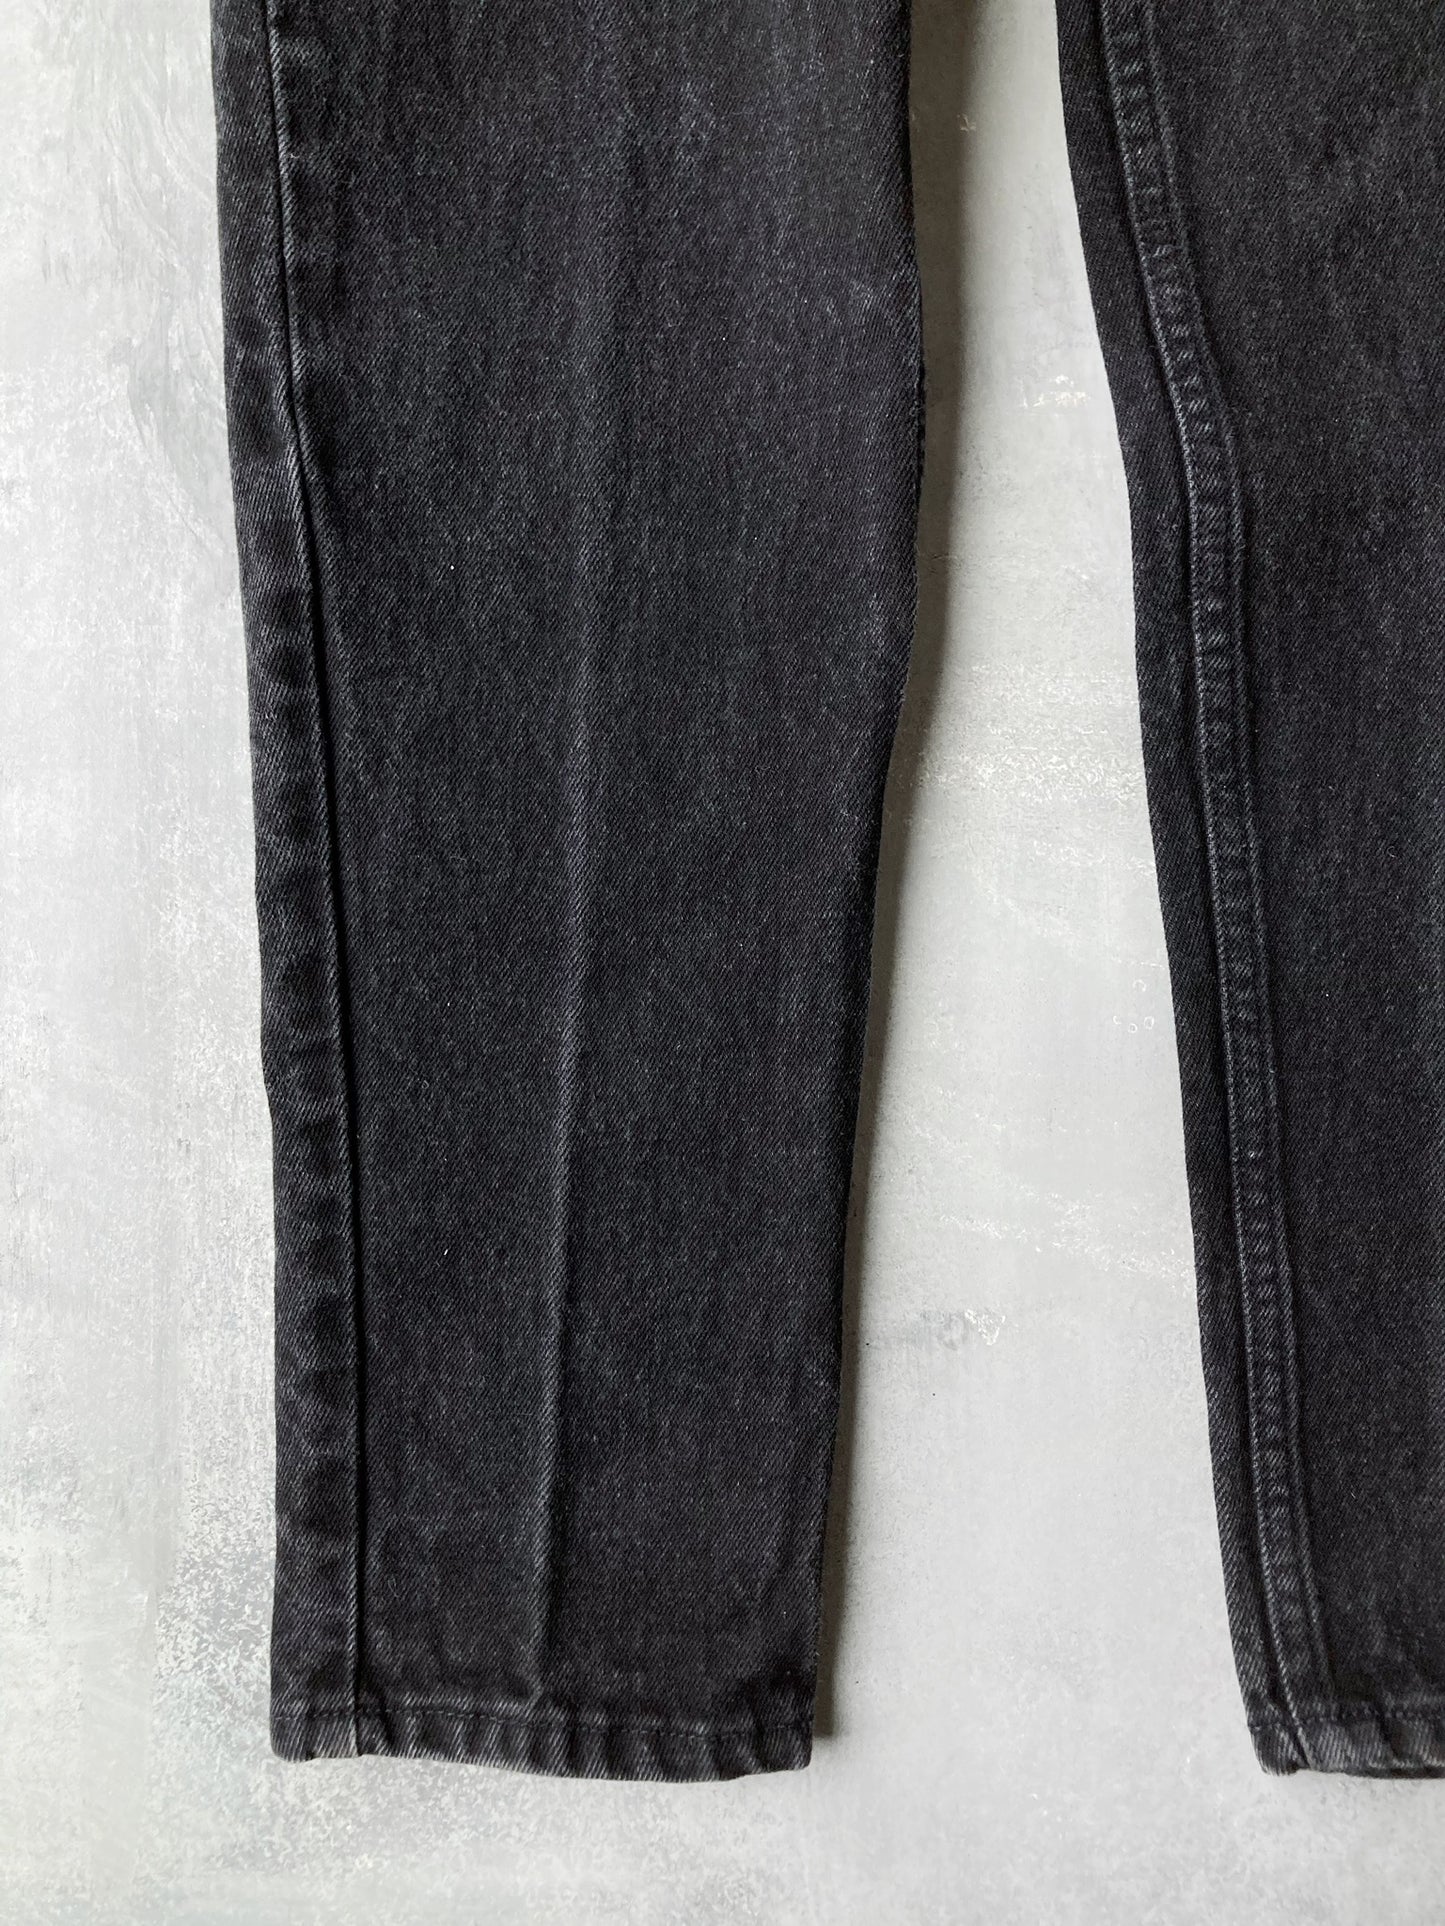 Levi's 512 Slim Fit Jeans 90's- Size 0